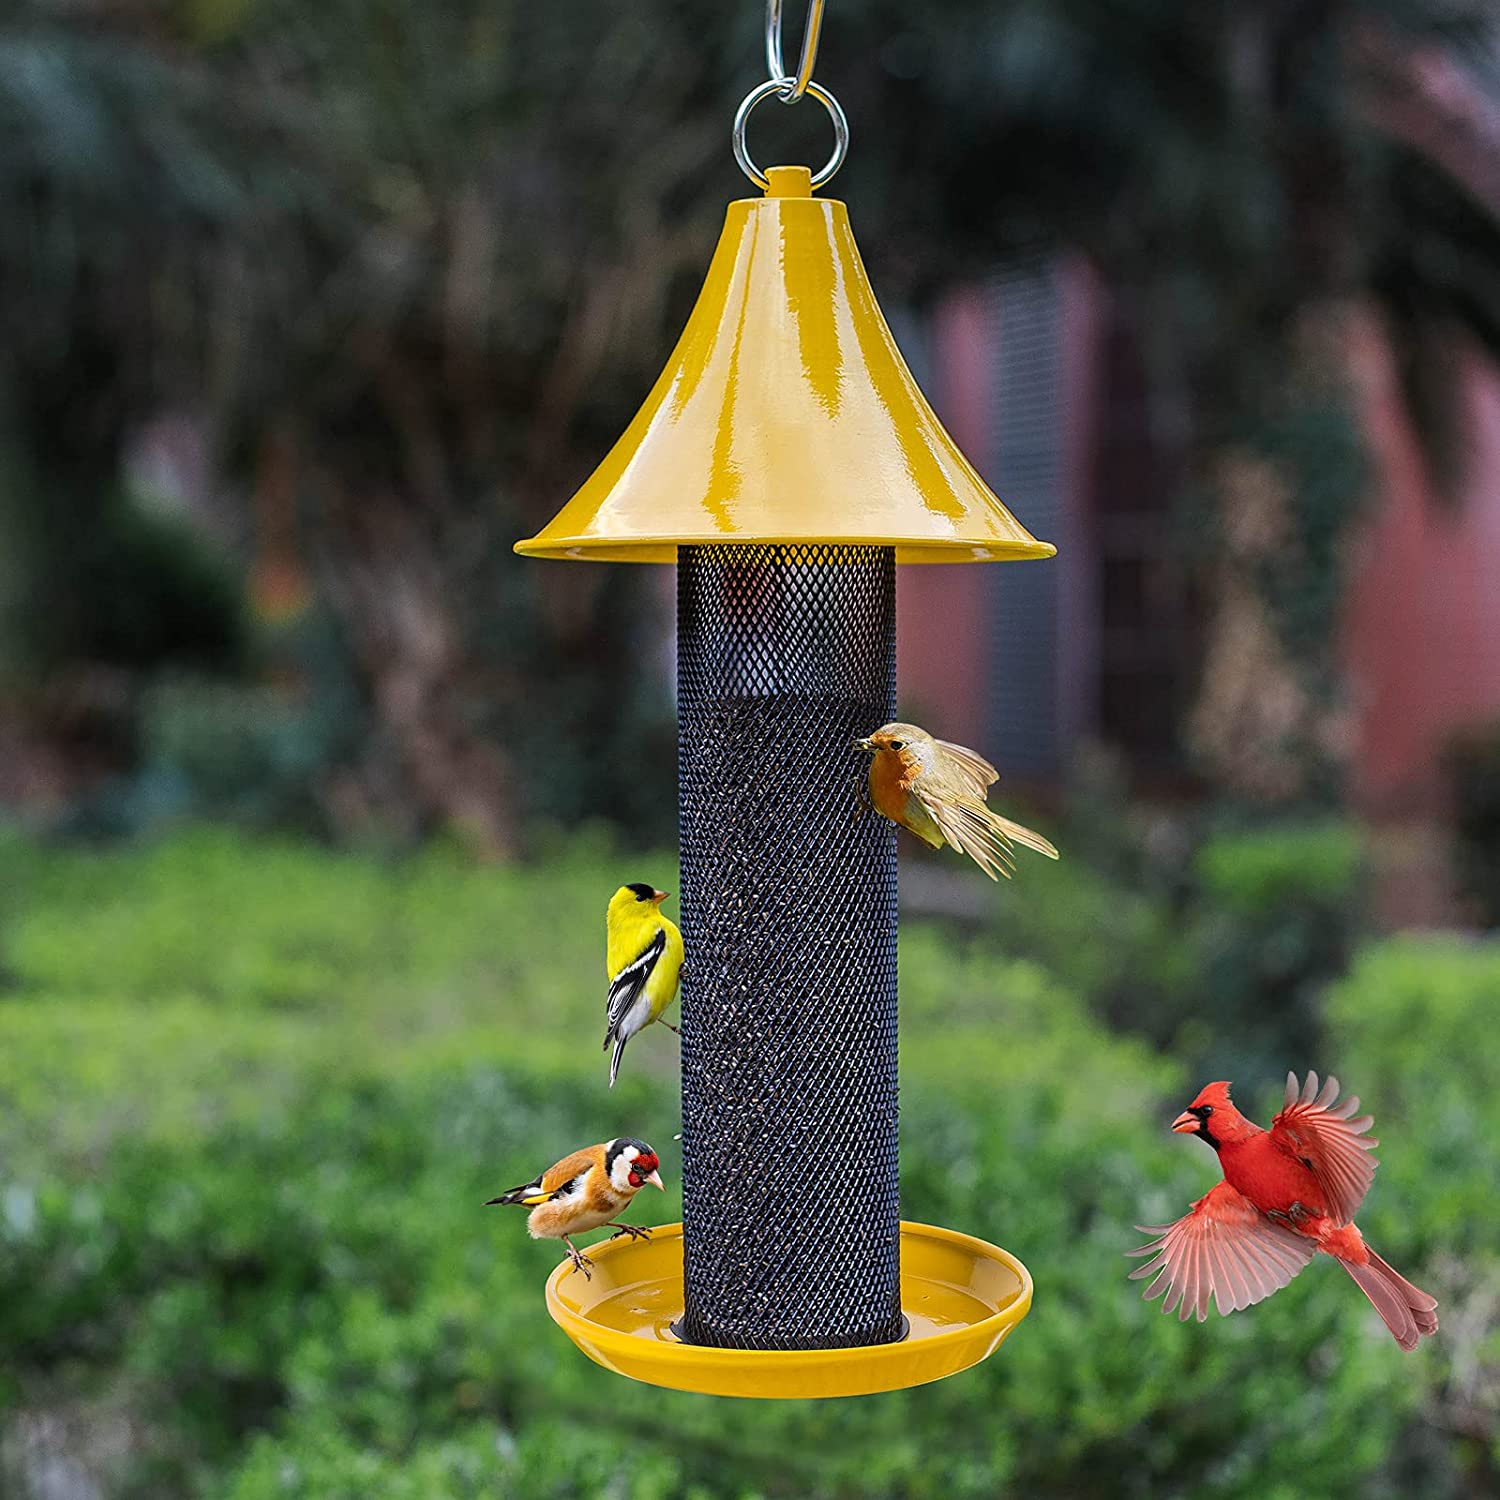 types of bird feeders - thistle feeder